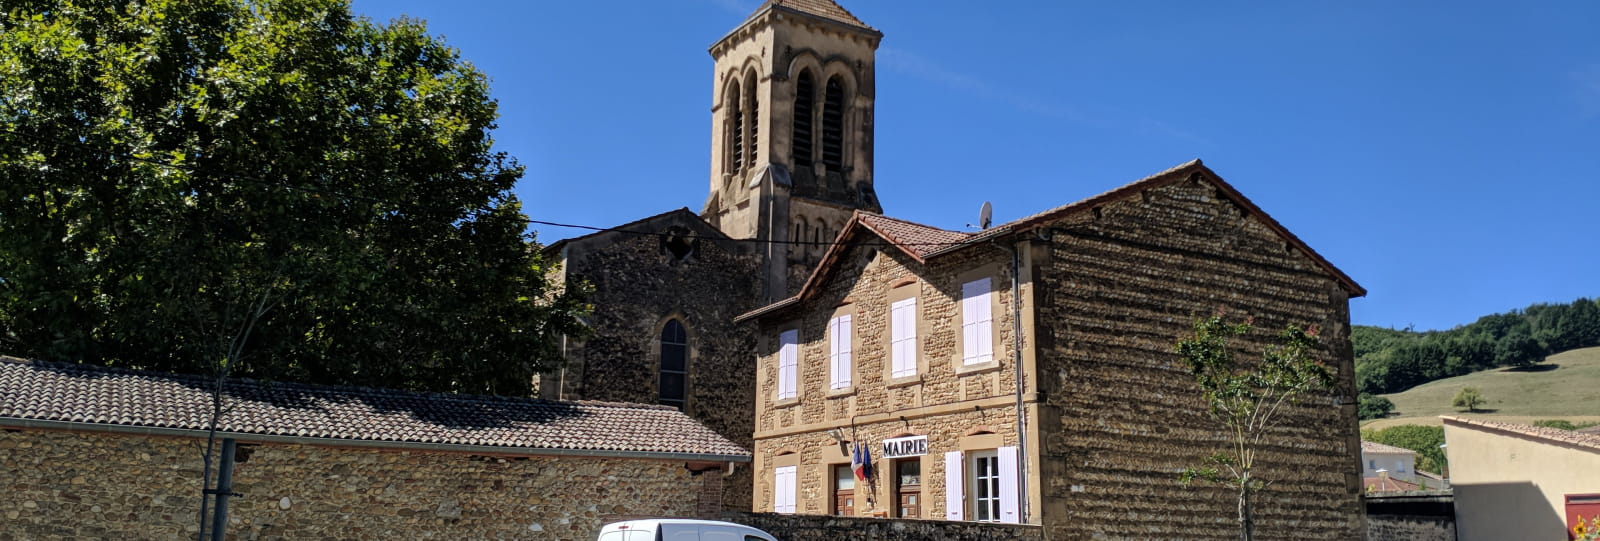 Saint-Michel-sur-Savasse